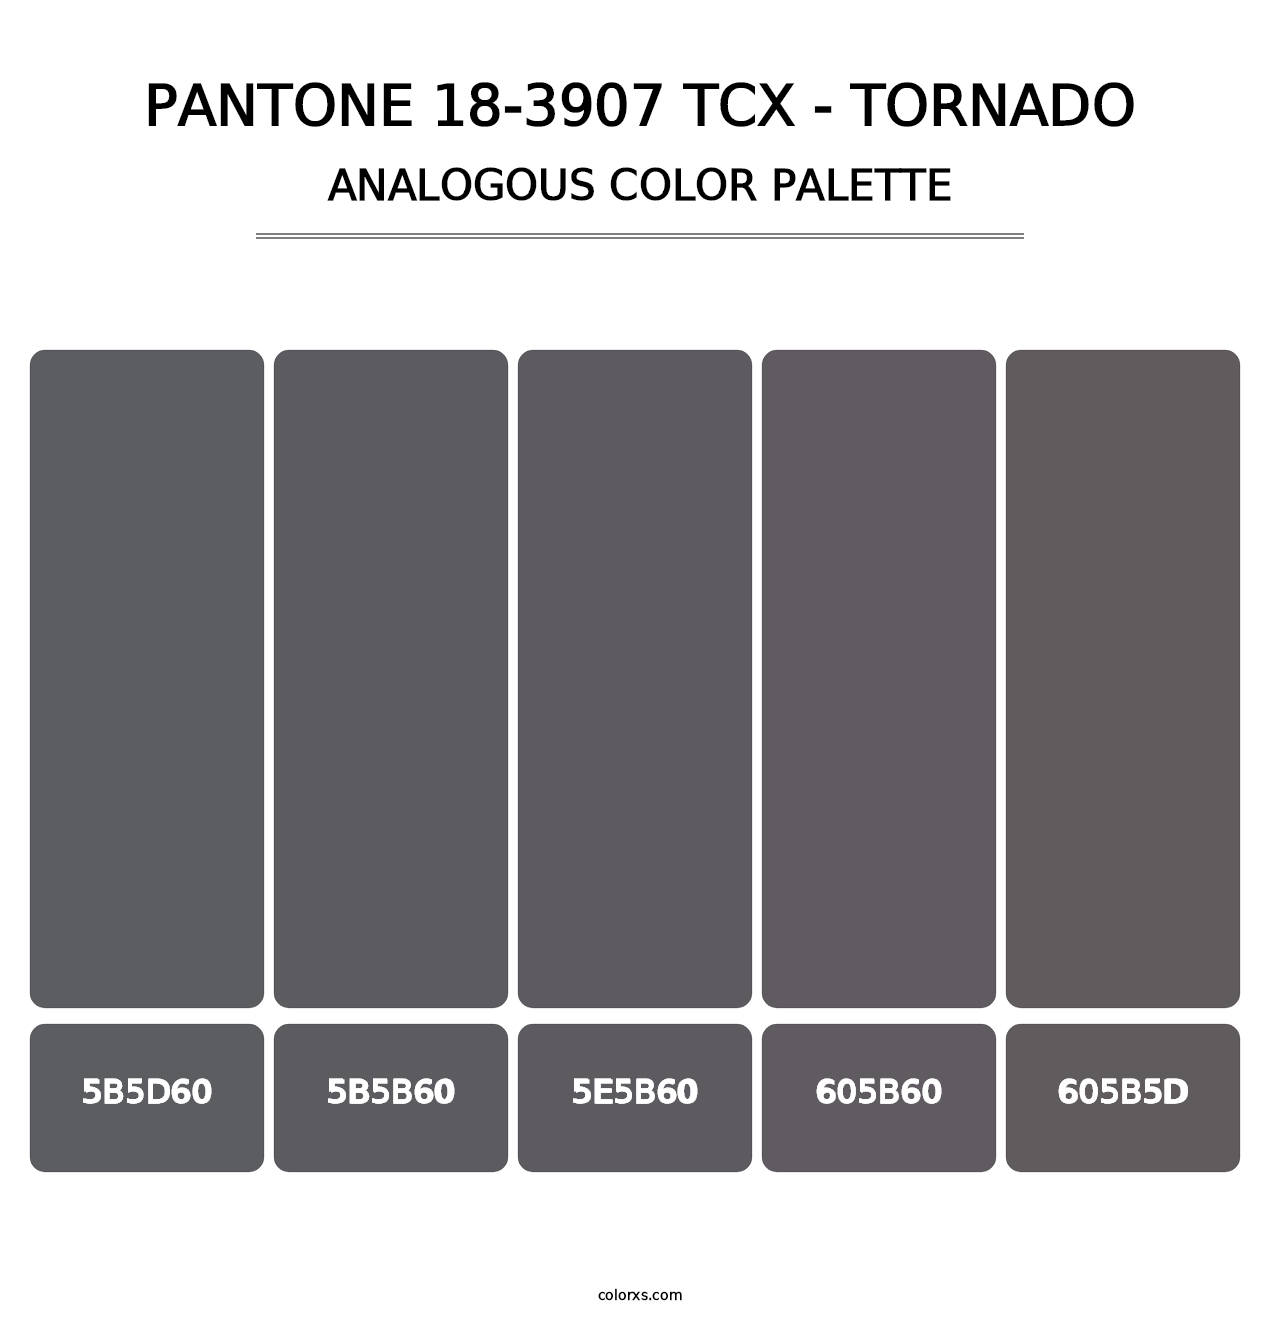 PANTONE 18-3907 TCX - Tornado - Analogous Color Palette